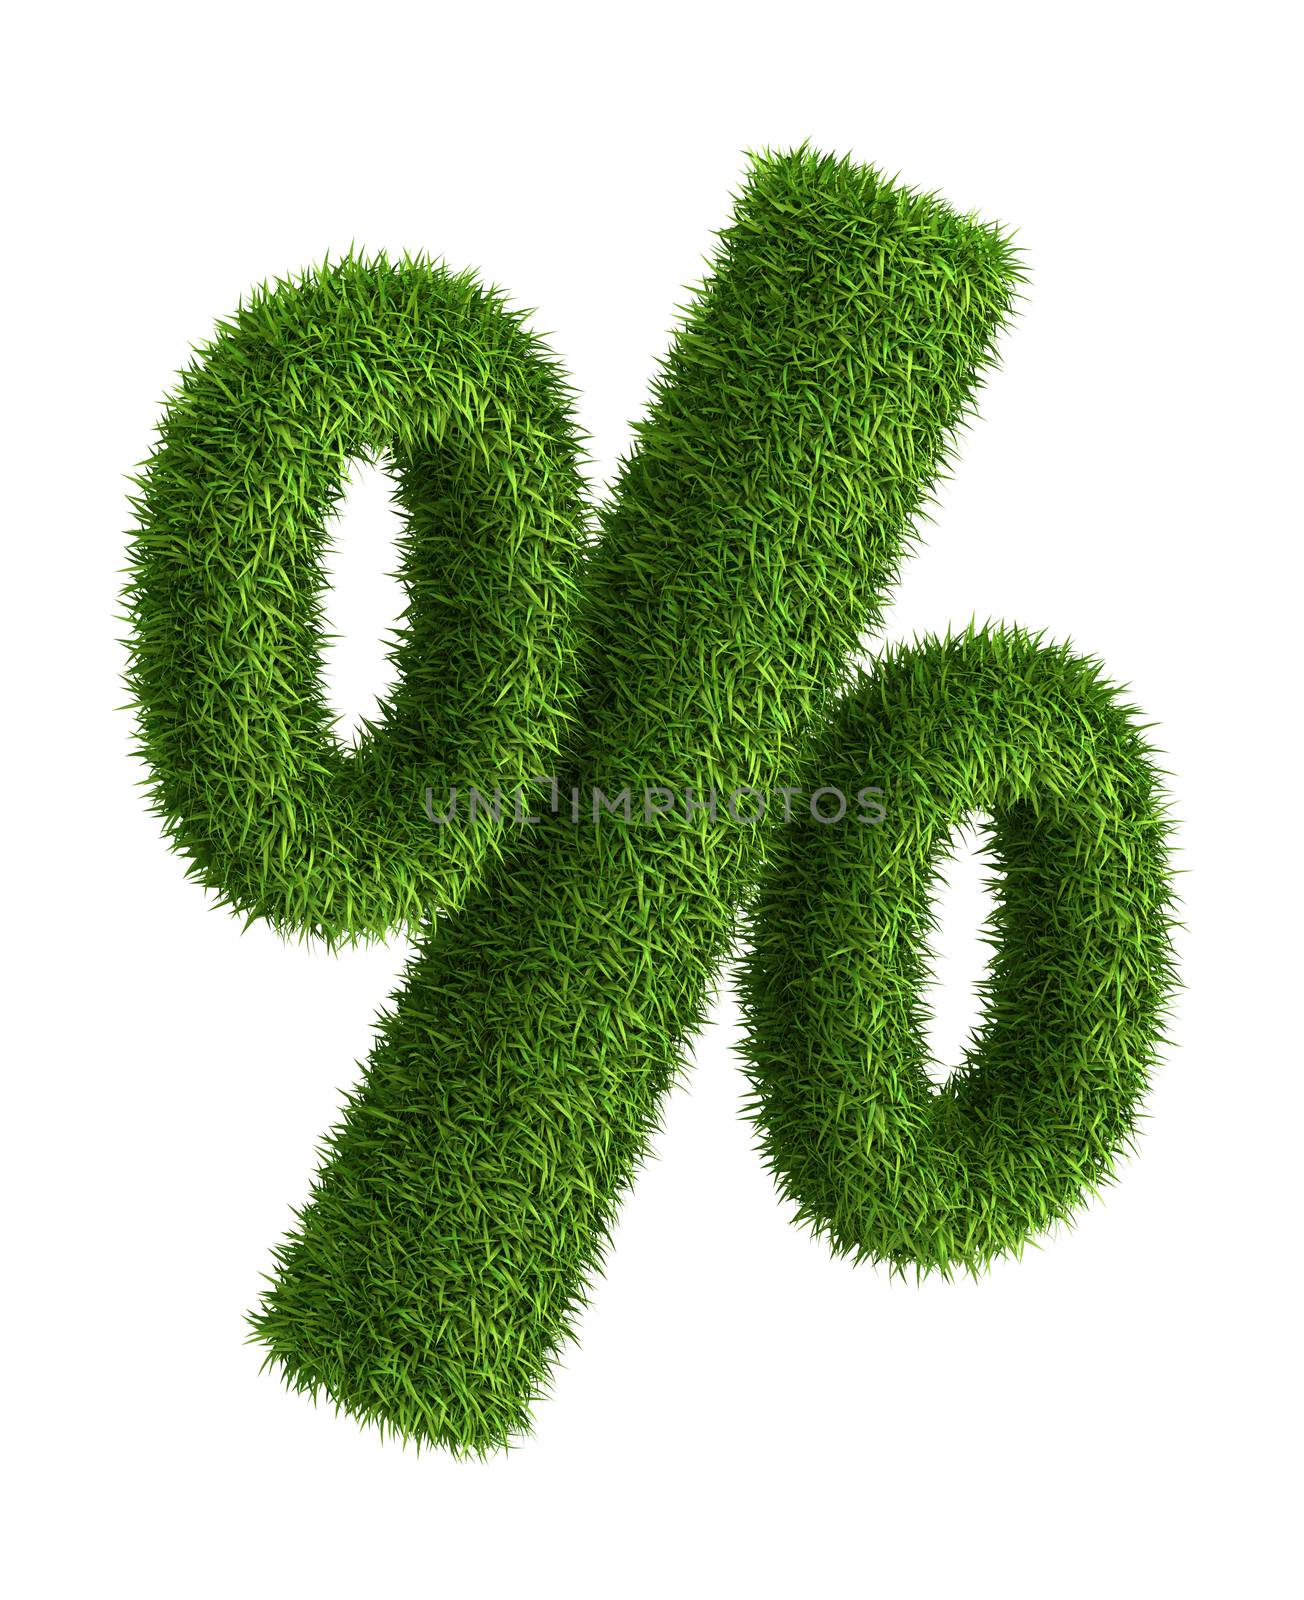 Natural grass percent sign by iunewind